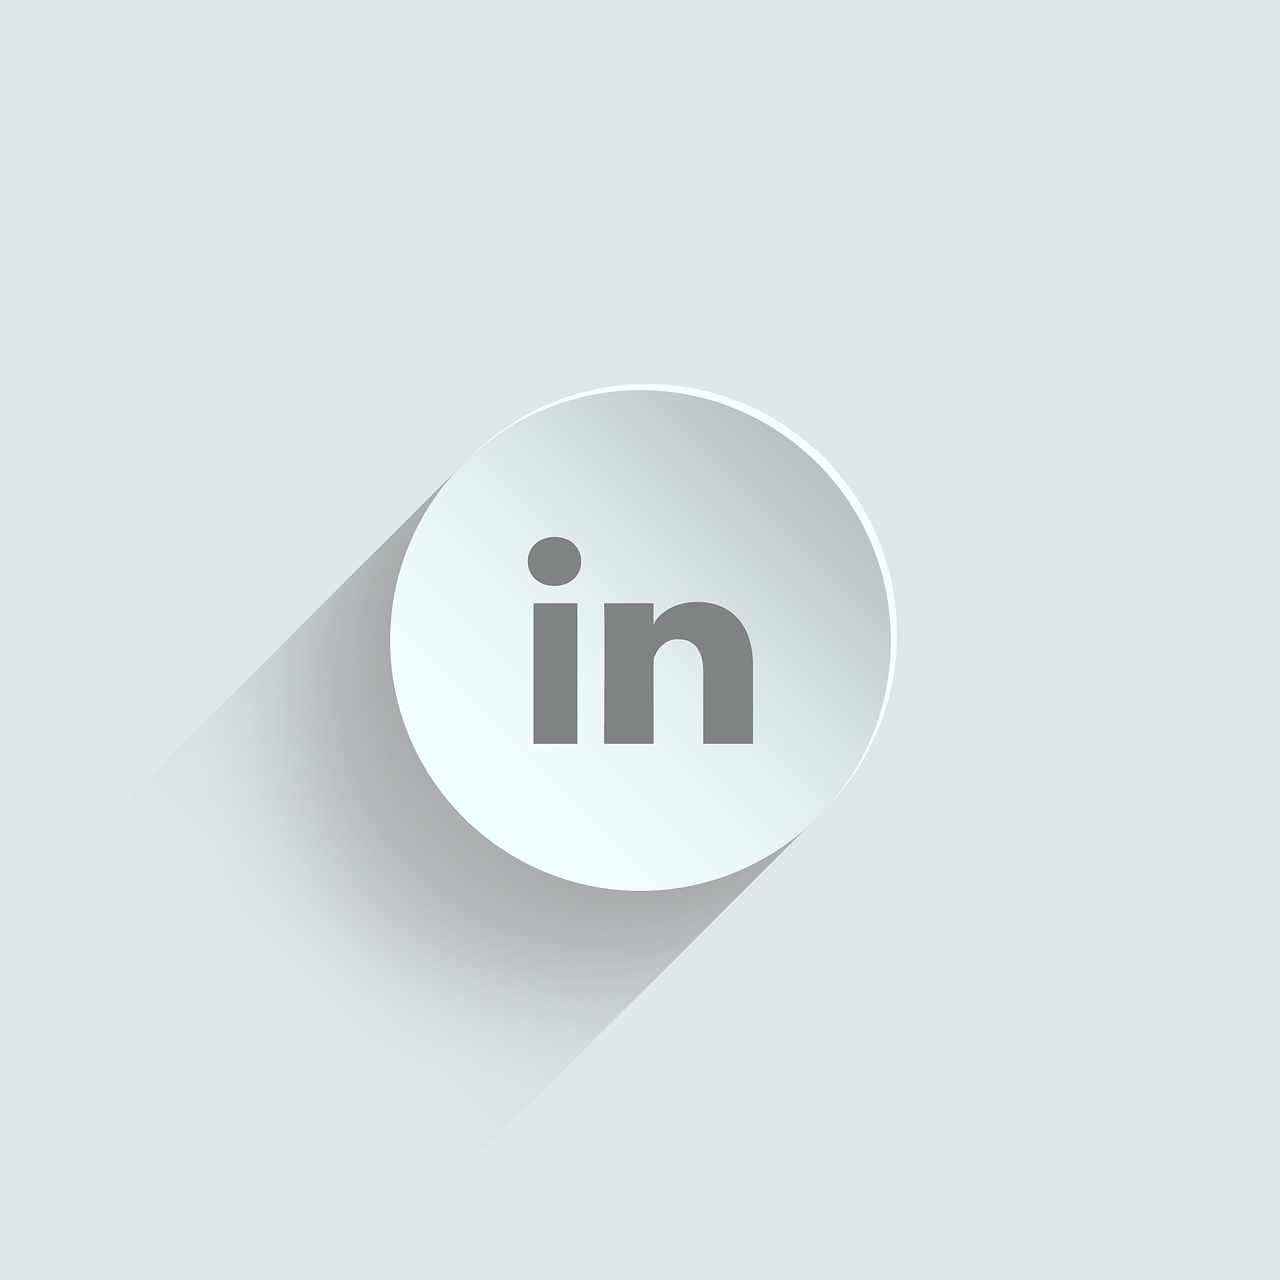 a variation of linkedin logo